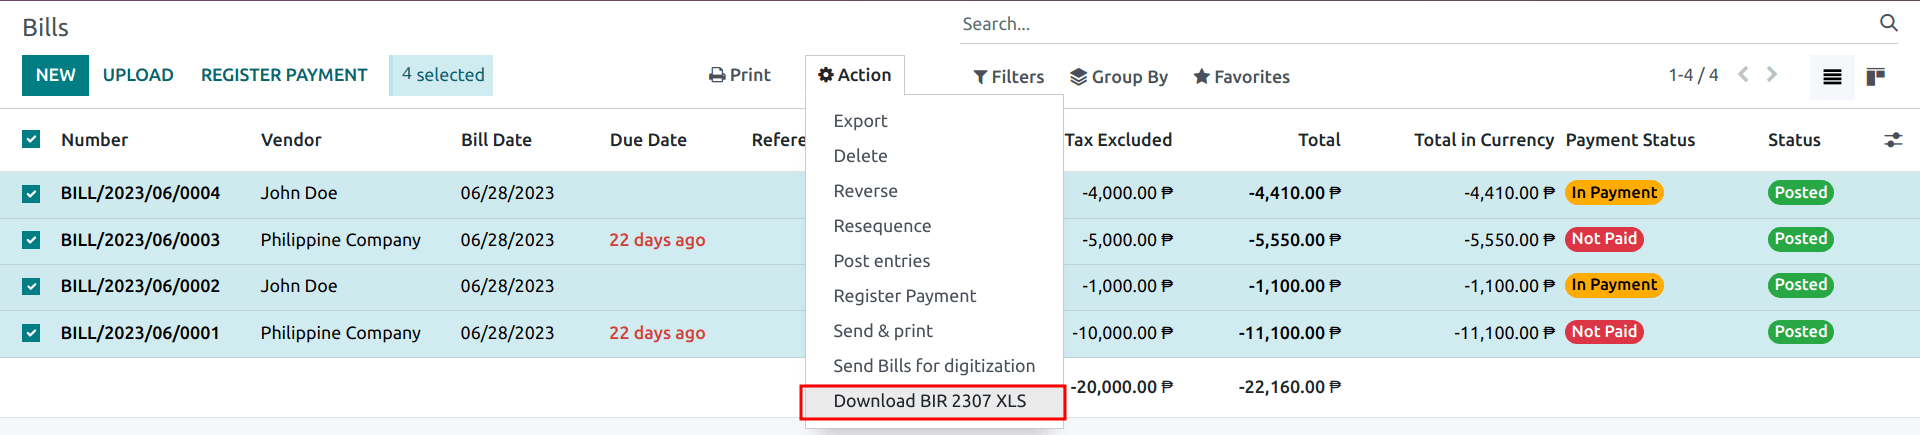 Multiple vendor bills selected with action to "Download BIR 2307 XLS".